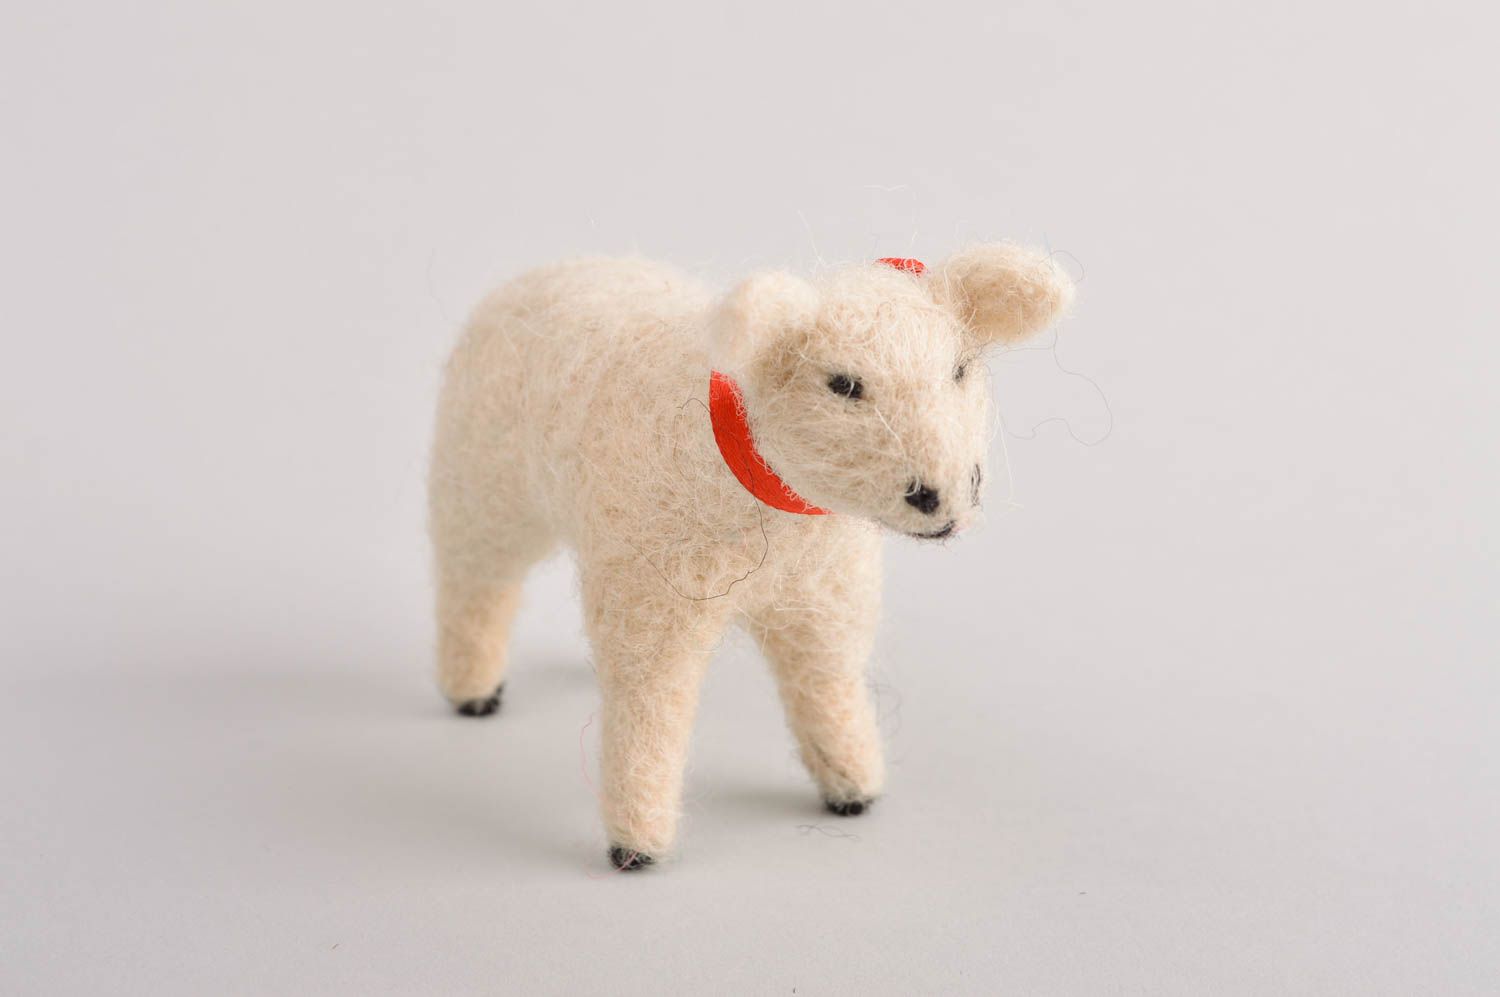 Handmade toy woolen toy for children interior decor ideas gift for baby photo 2